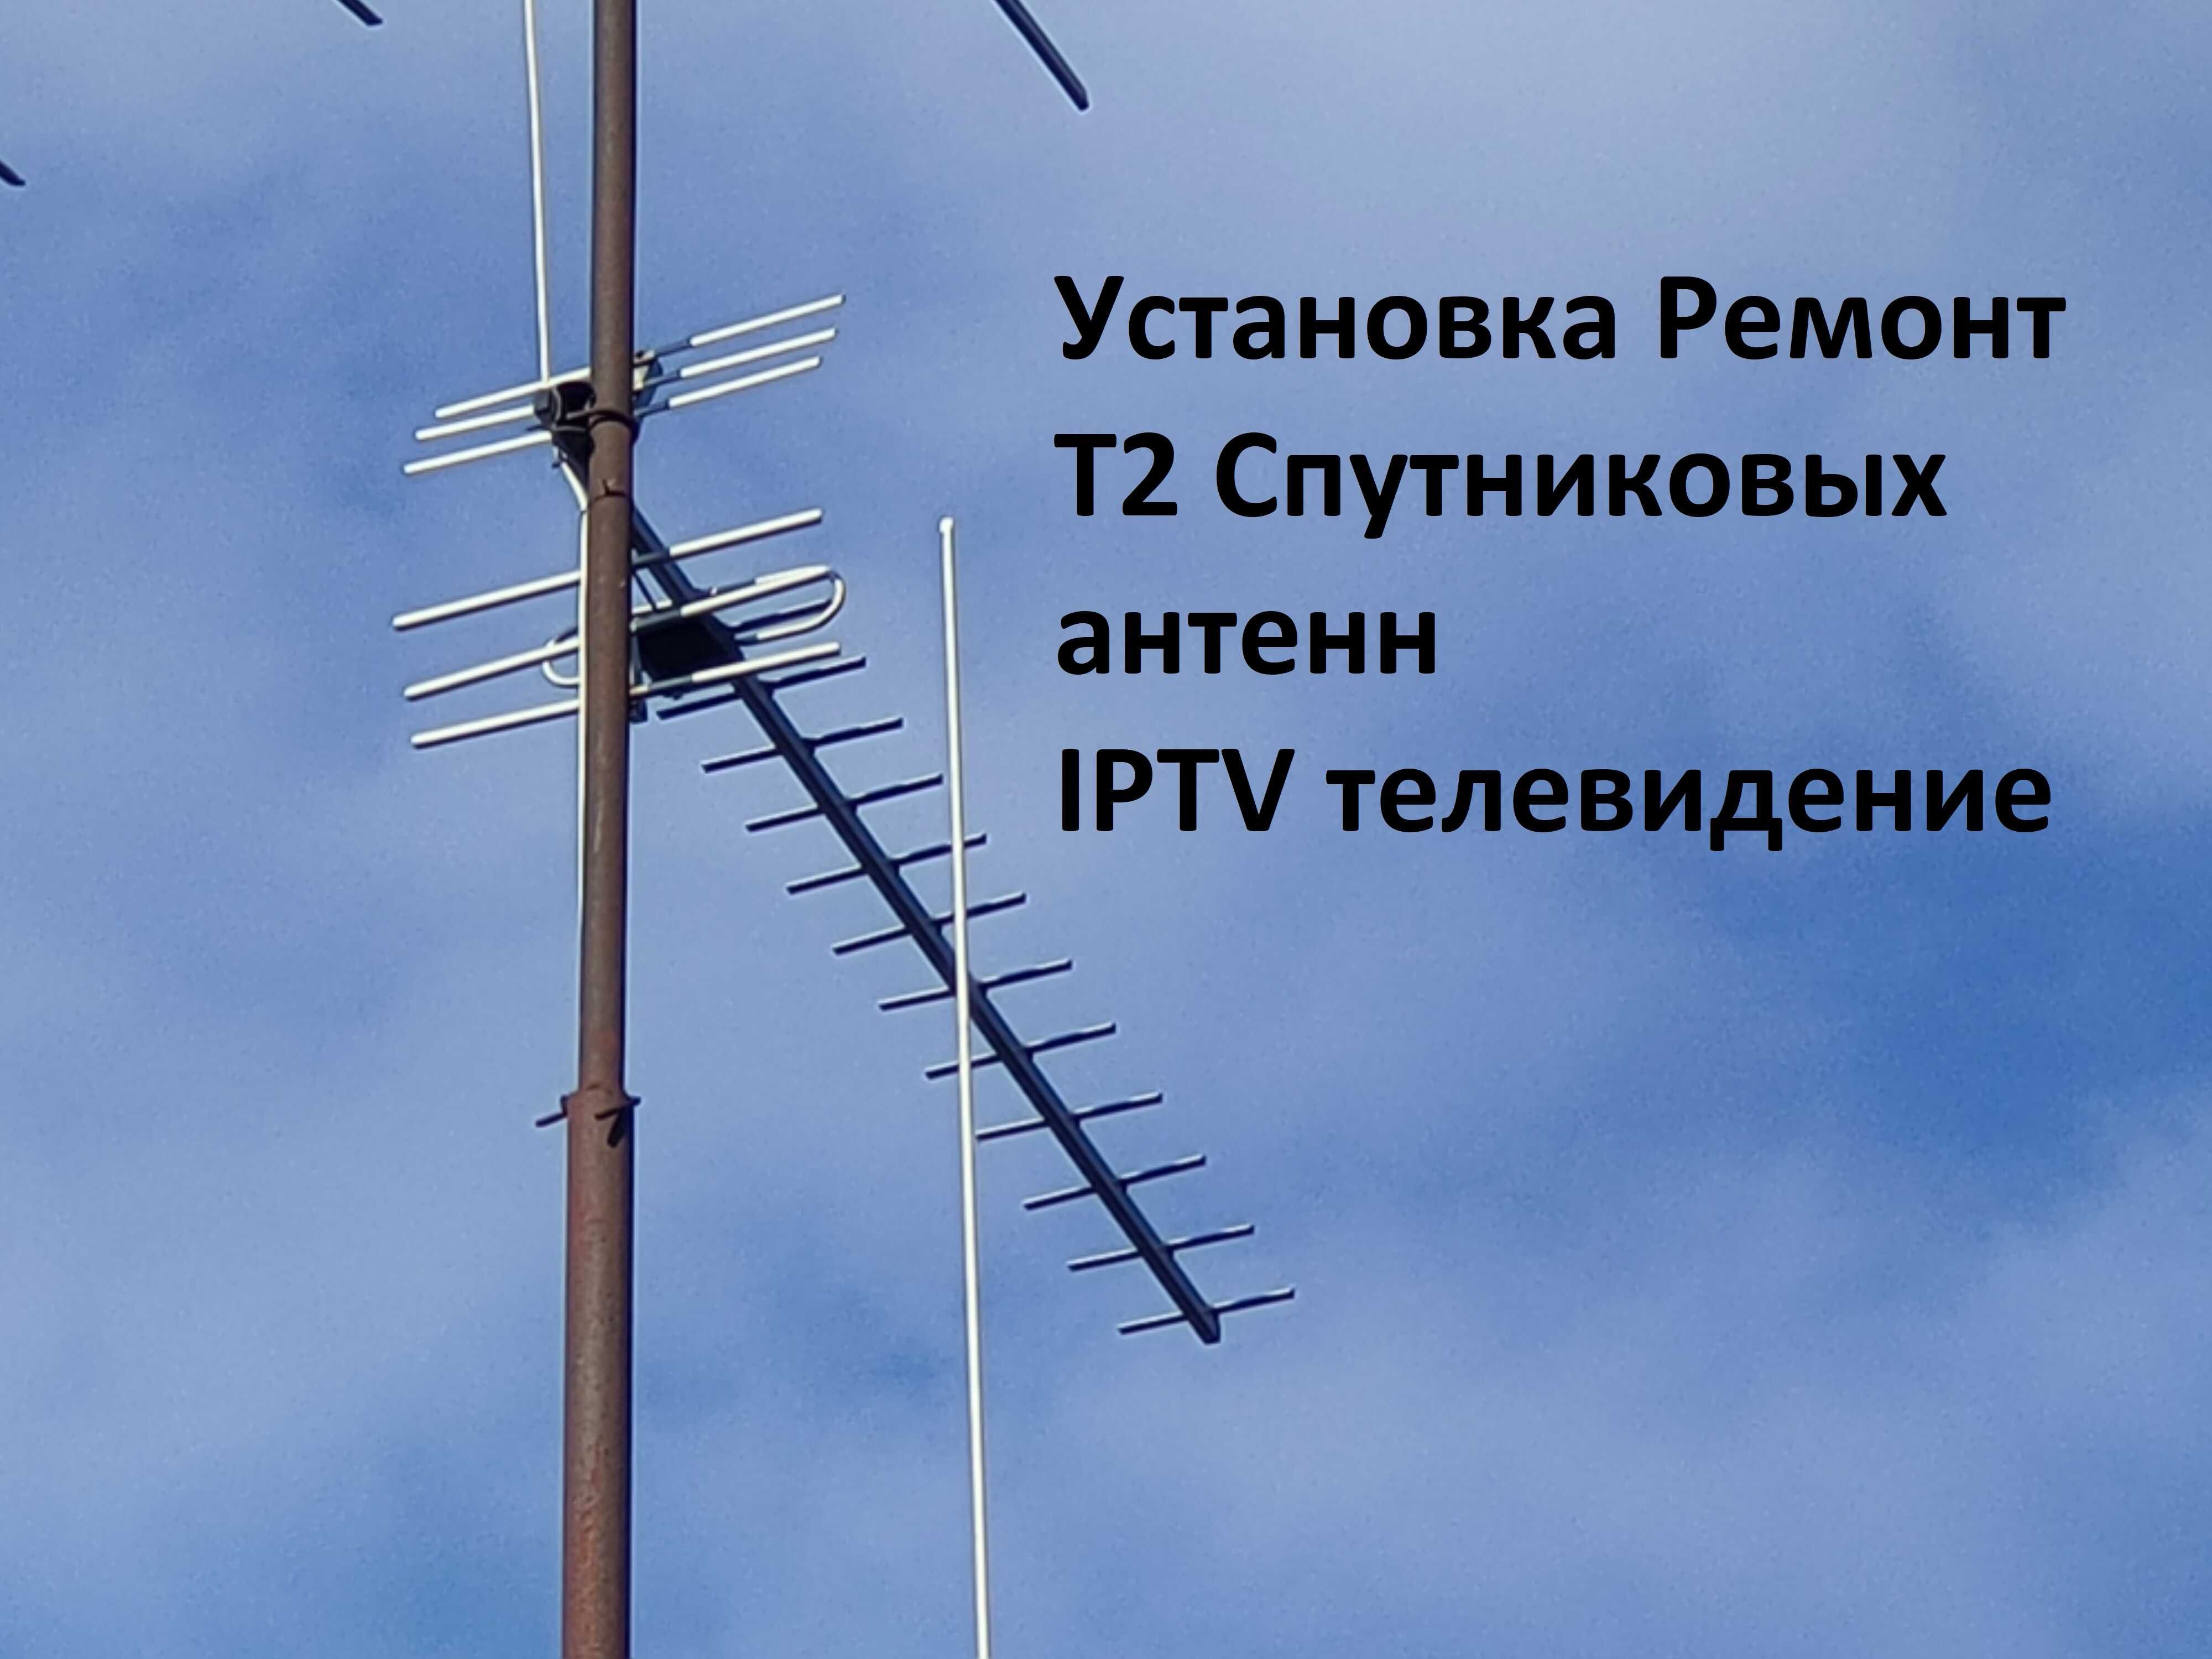 Установка и ремонт T2 антенн, спутниковых антенн, IPTV телевидения.